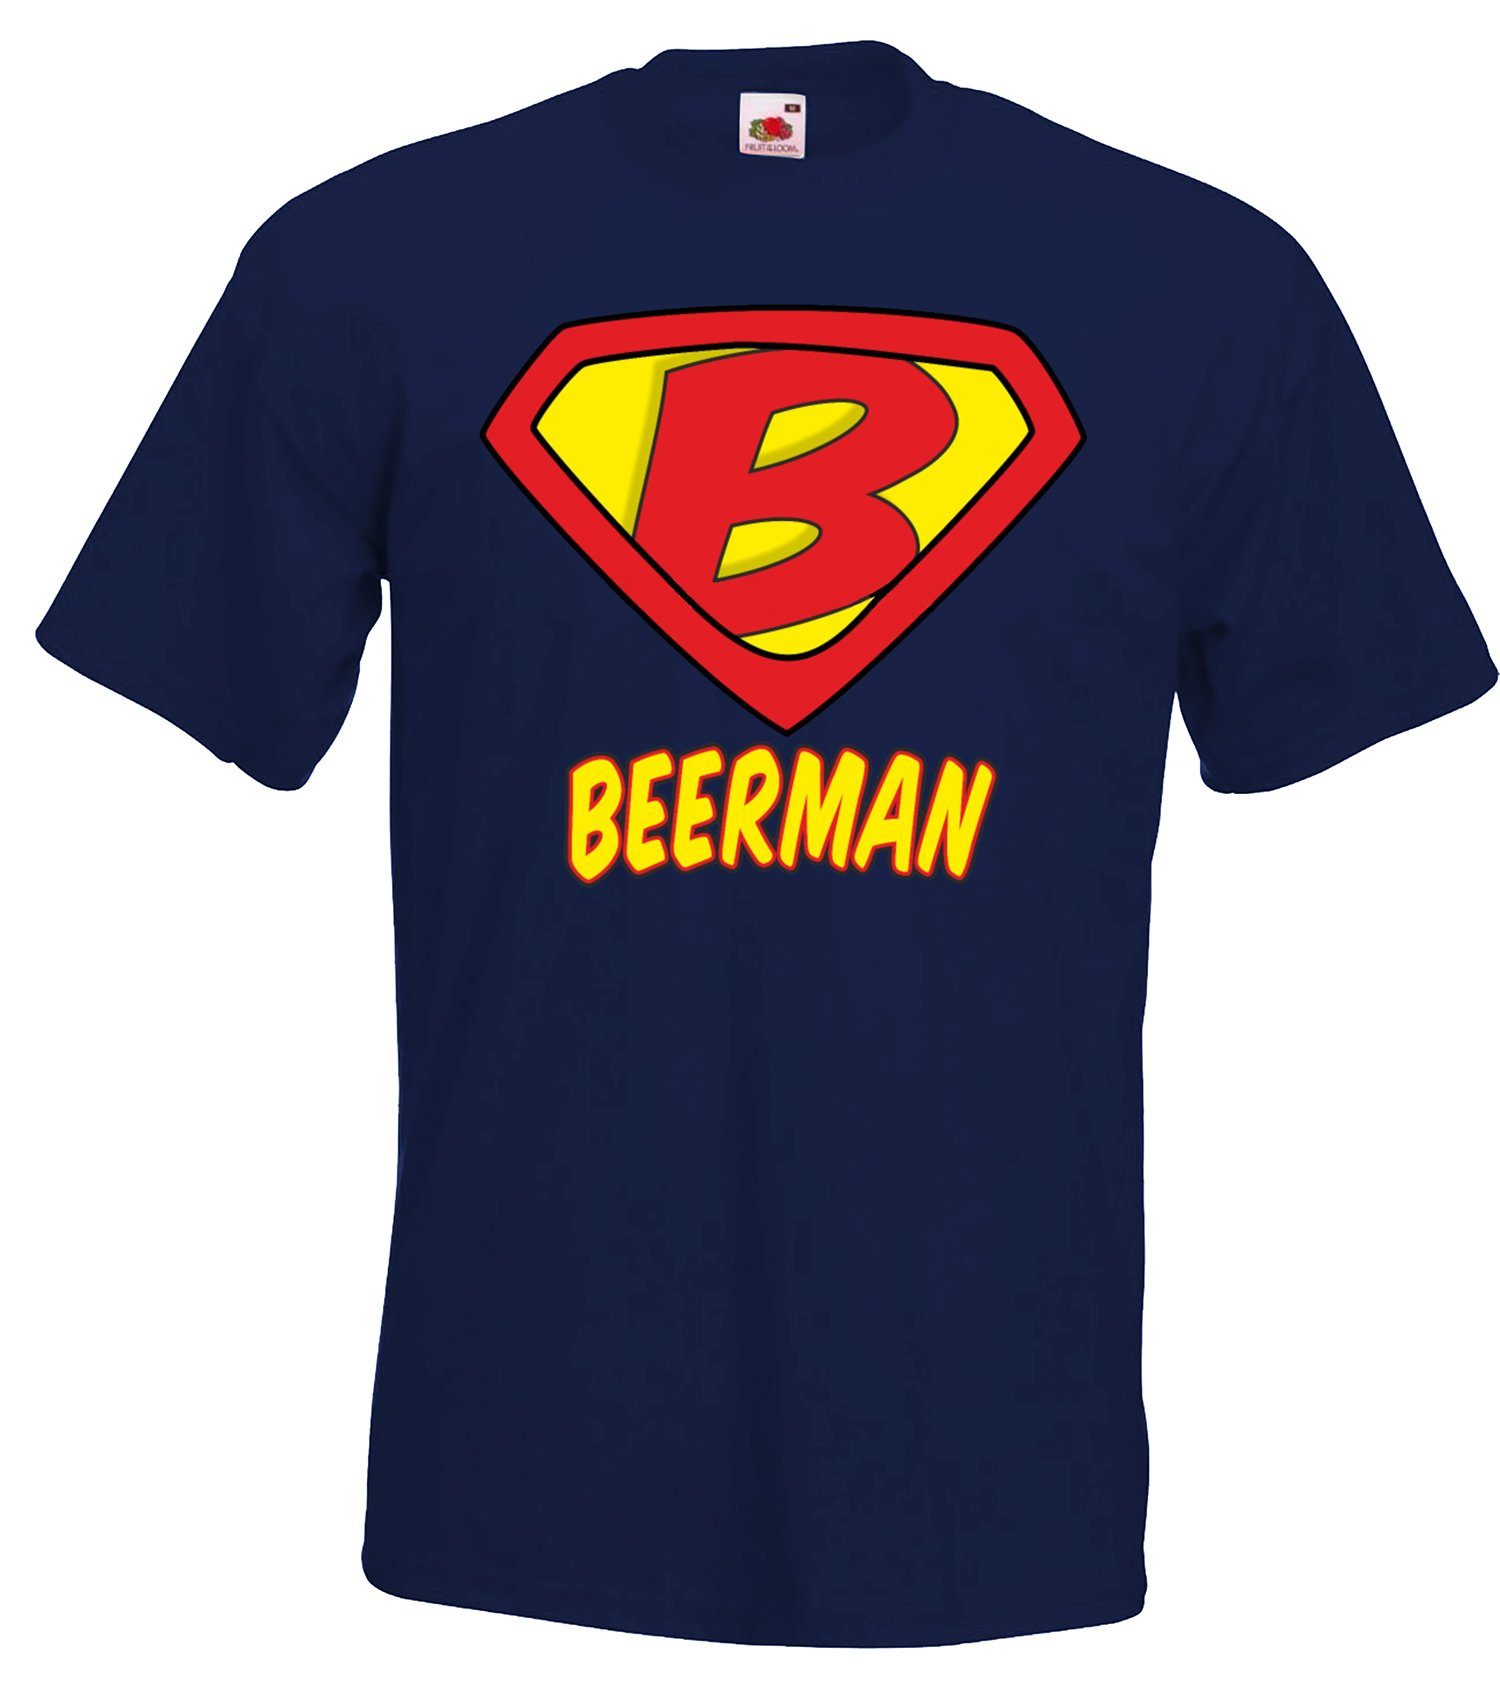 Youth Herren Shirt mit witzigem Navyblau T-Shirt Helden Frontprint Beerman Designz